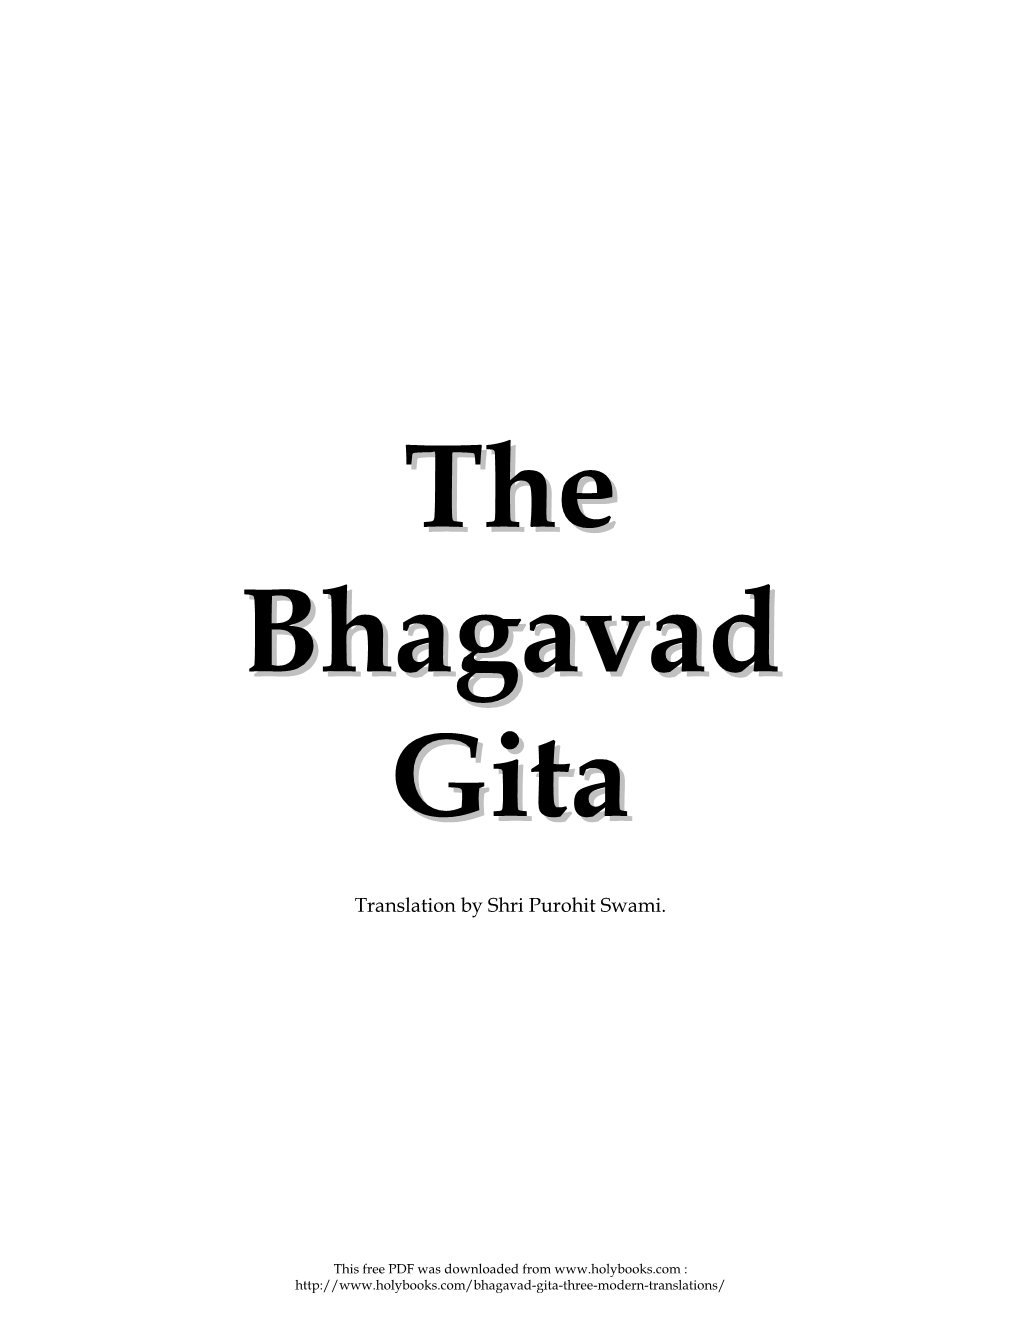 The Bhagavad Gita Translation by Shri Purohit Swami